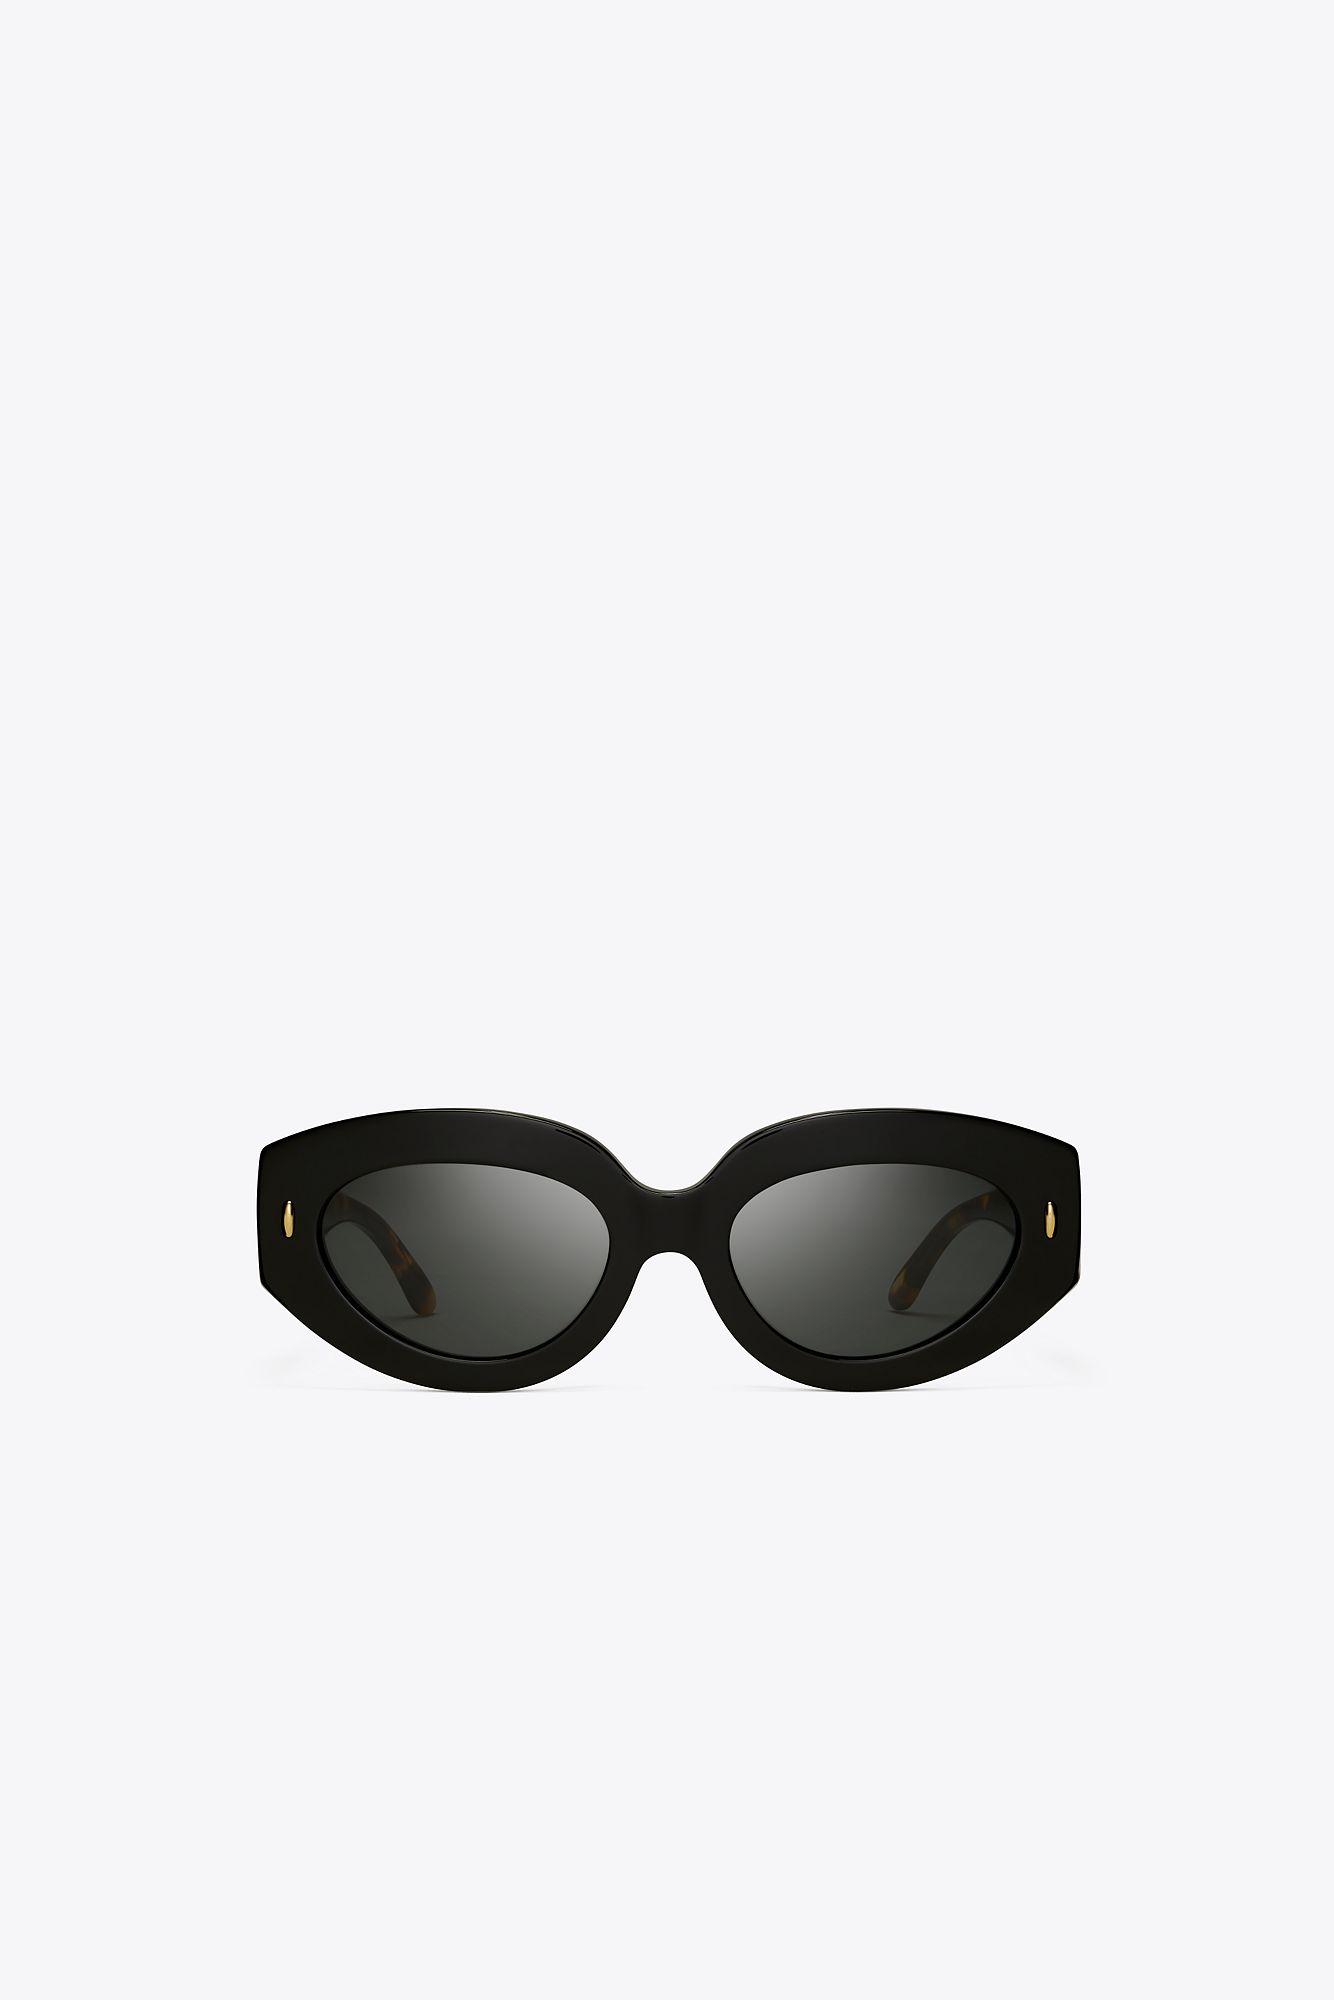 Tory Burch Miller Oversized Cat-eye Sunglasses in Black | Lyst